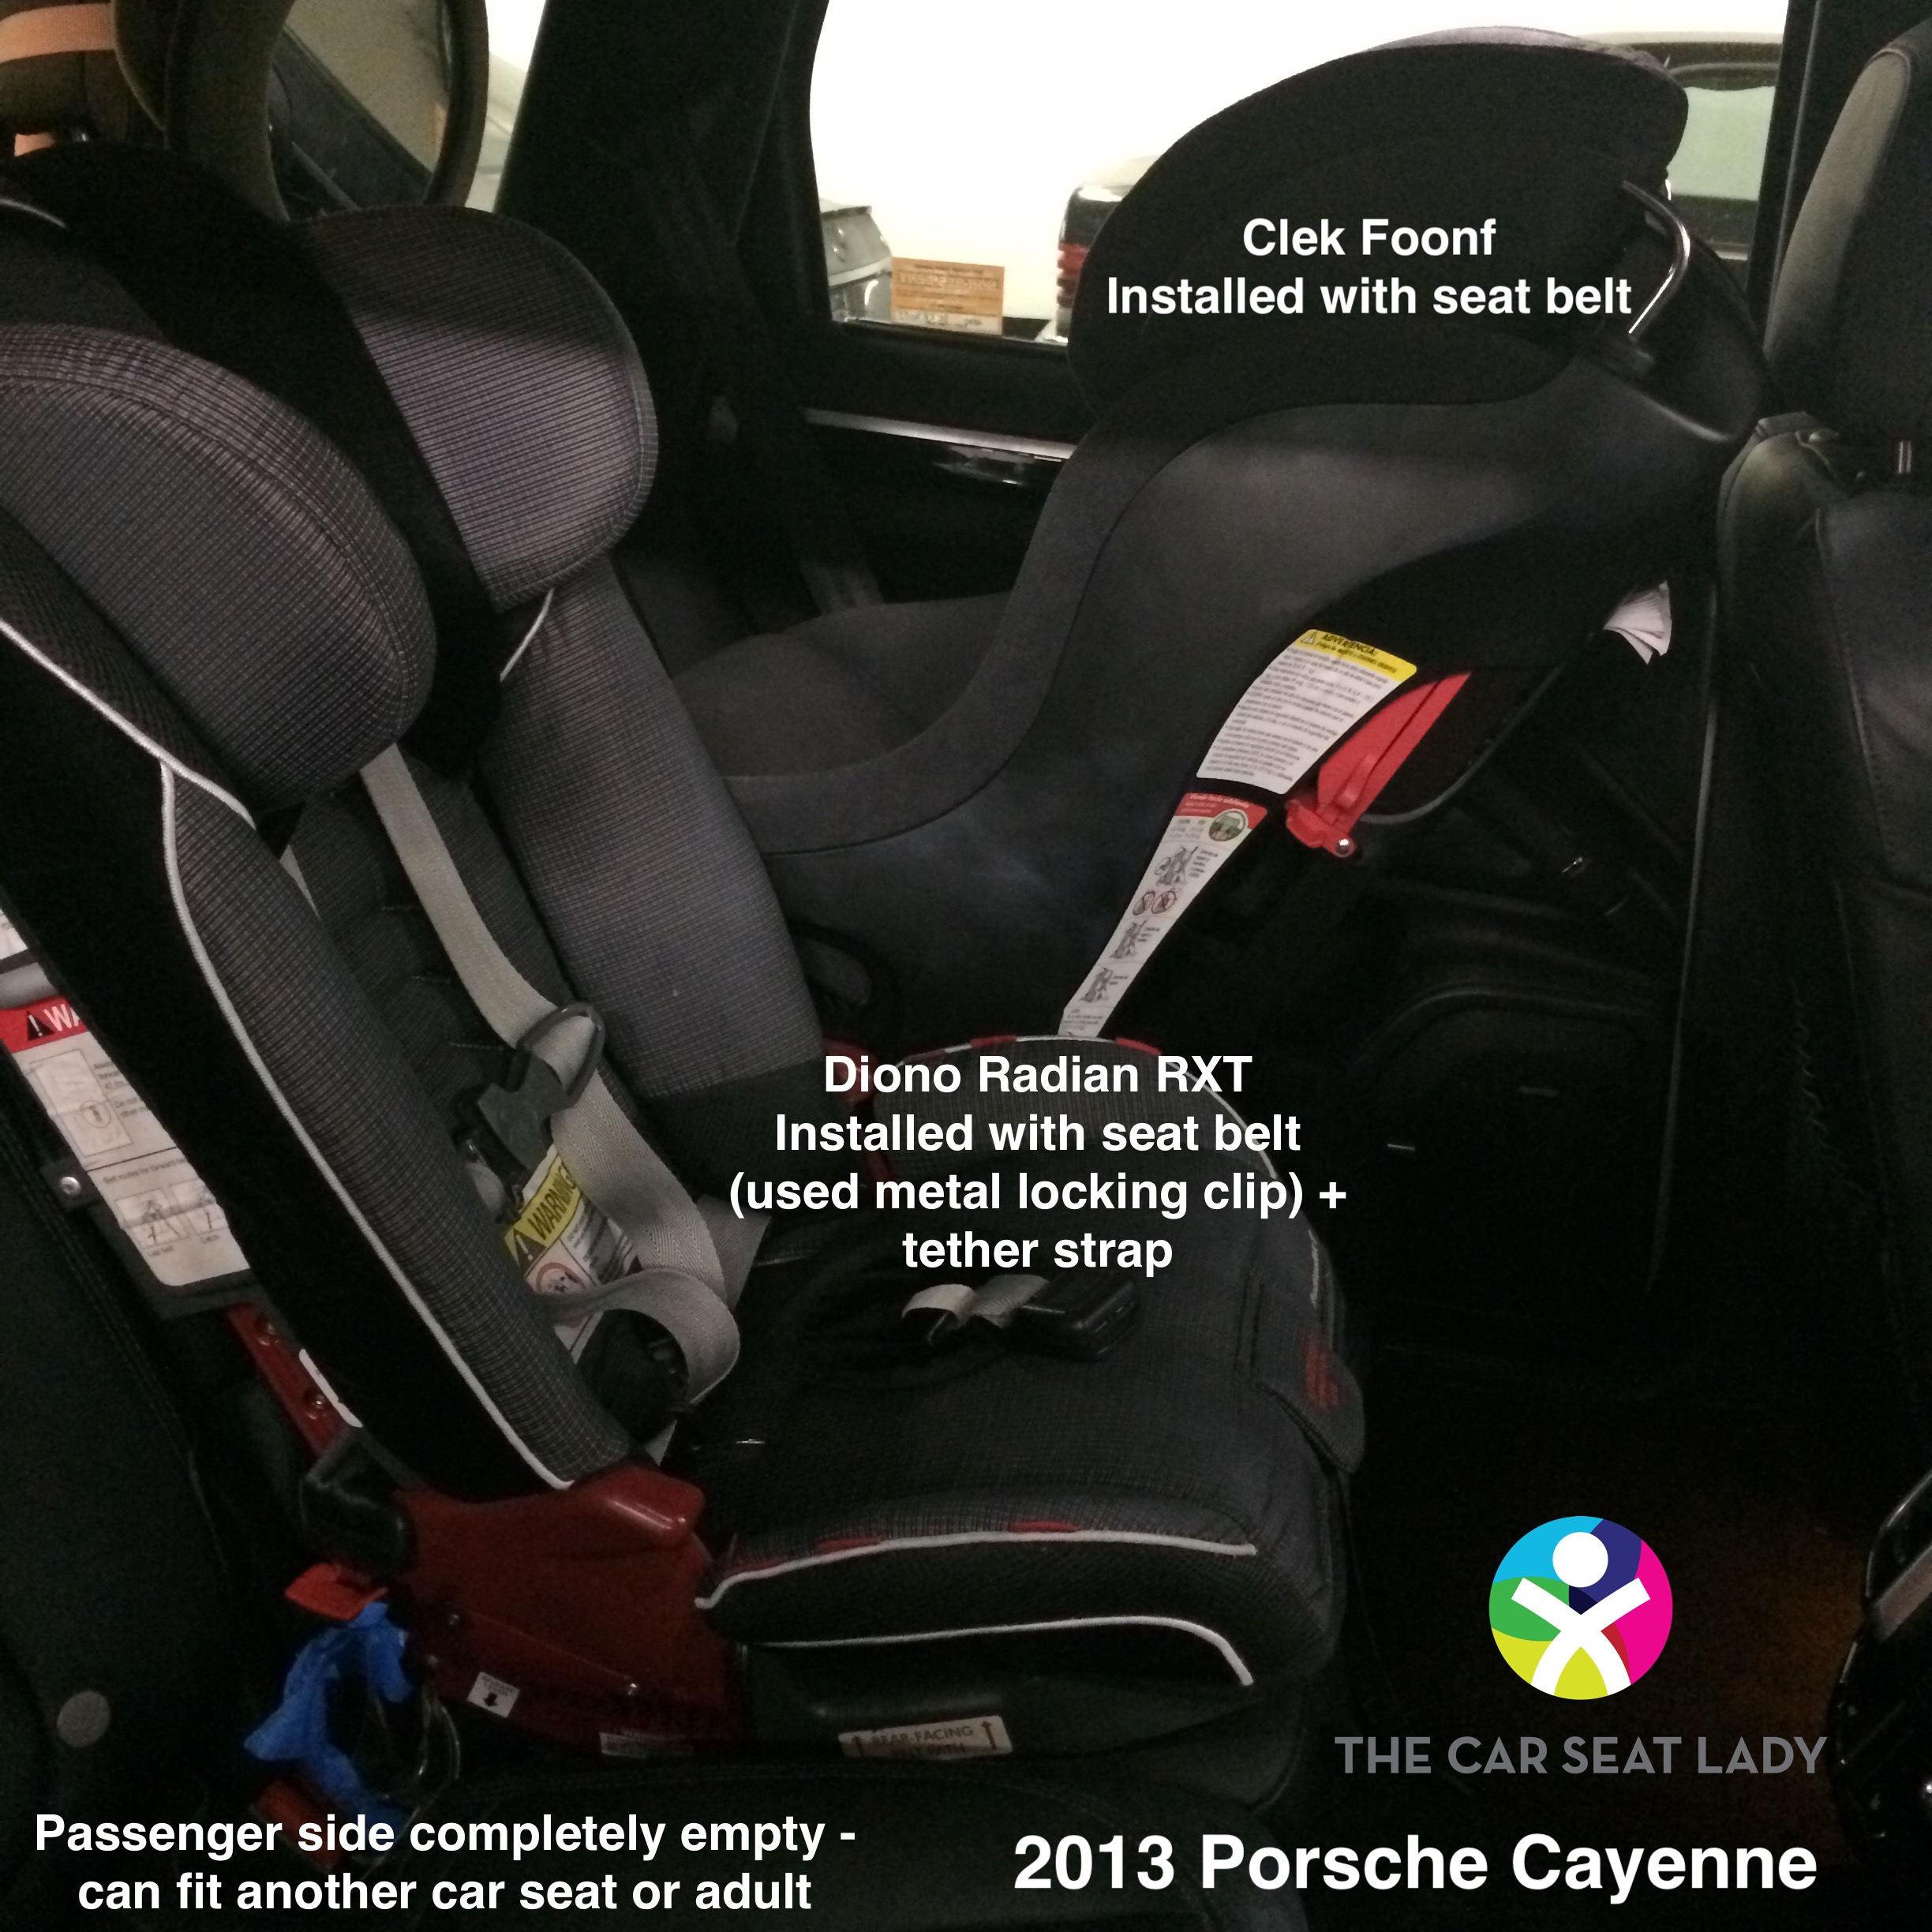 The Car Seat LadyAudi Q5 - The Car Seat Lady